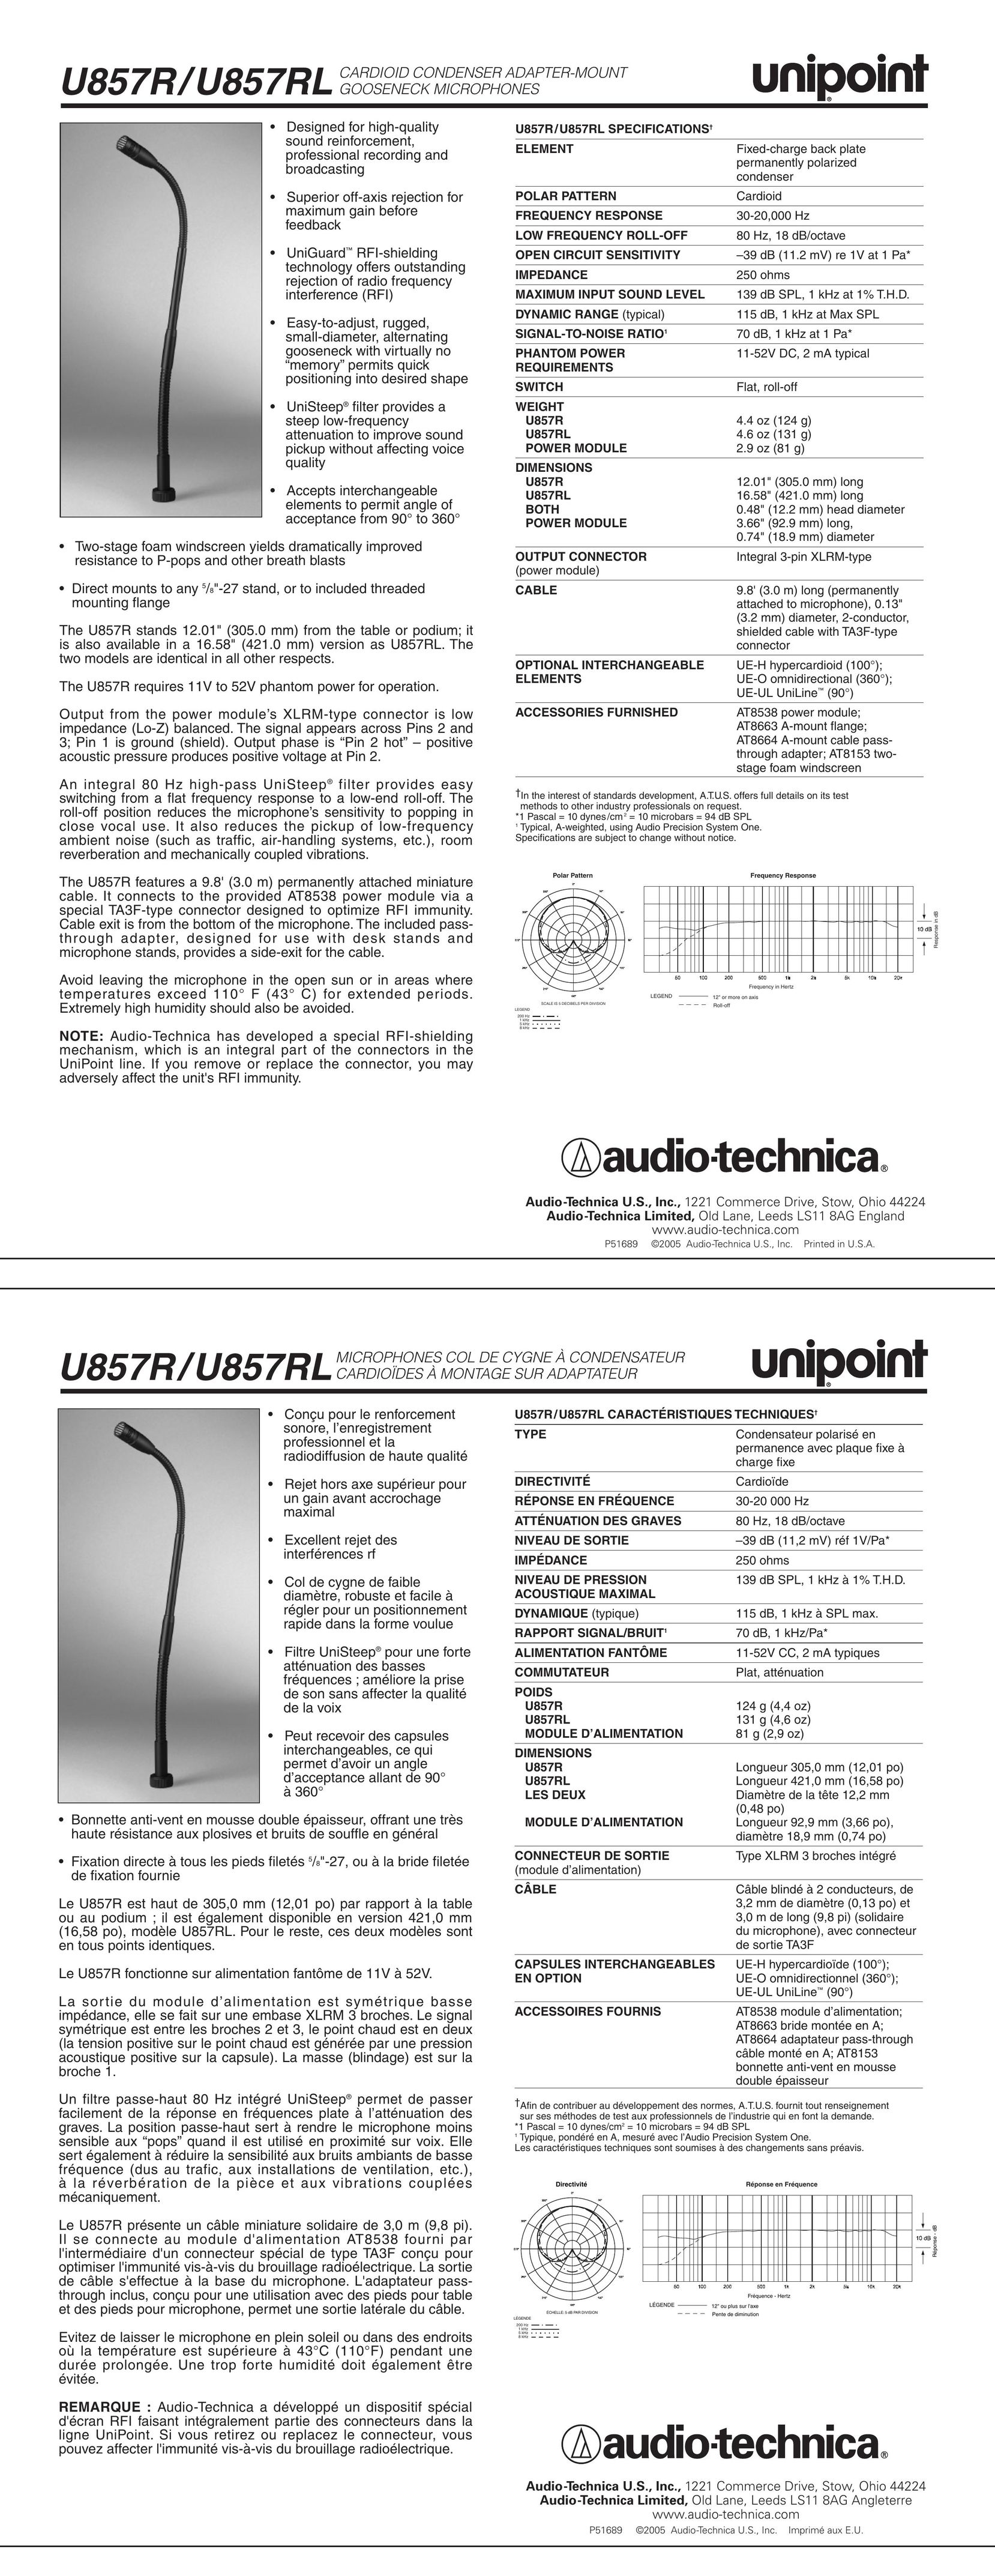 Audio-Technica U857R Headphones User Manual